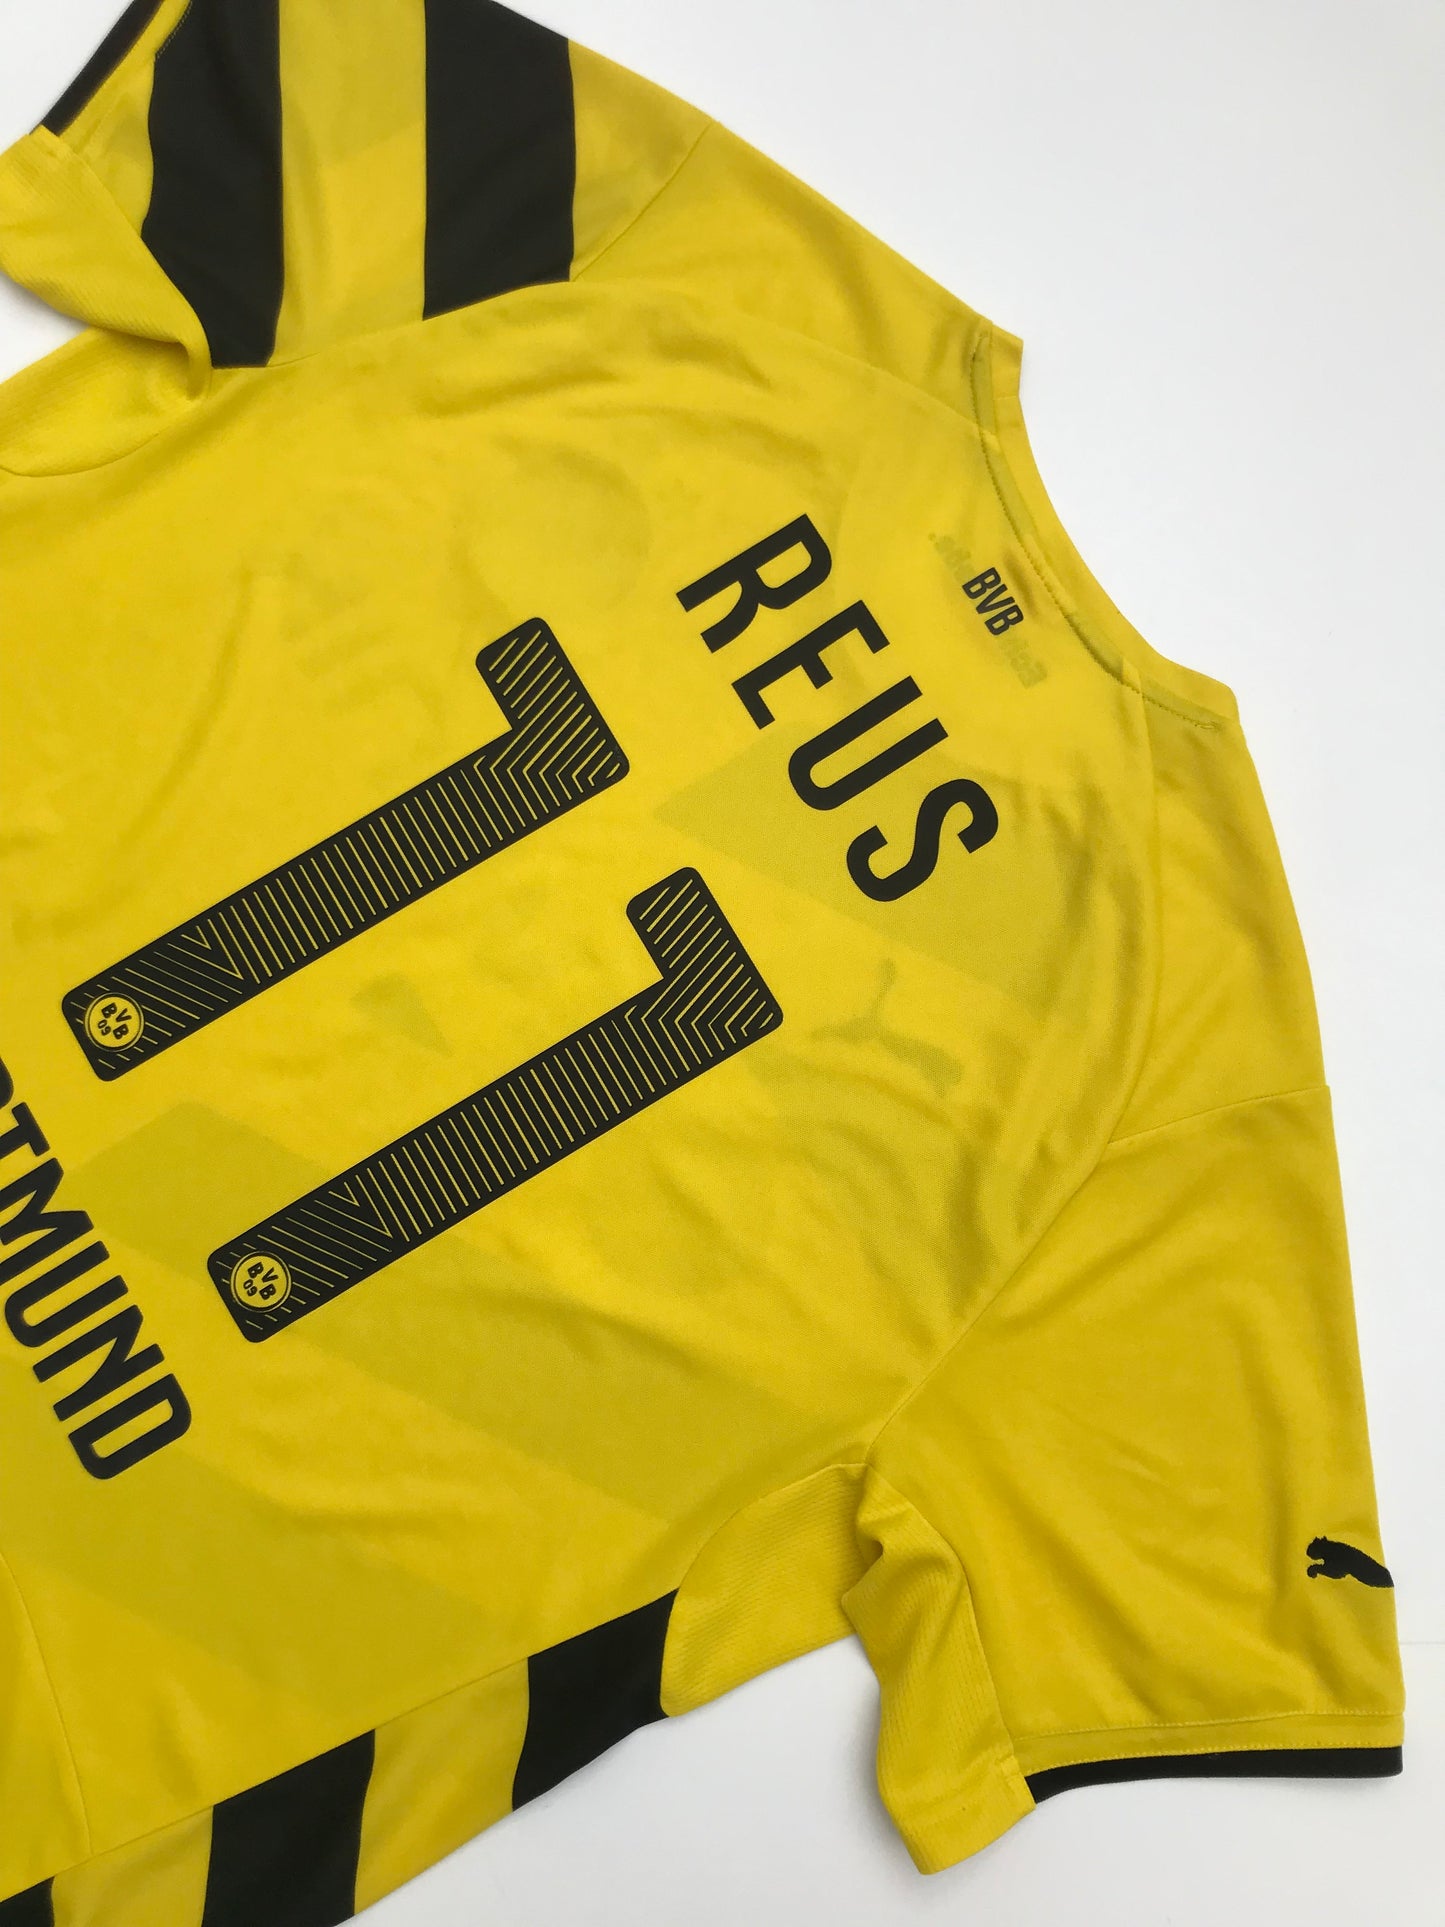 Jersey Borussia Dortmund Local 2014 2015 (XL)